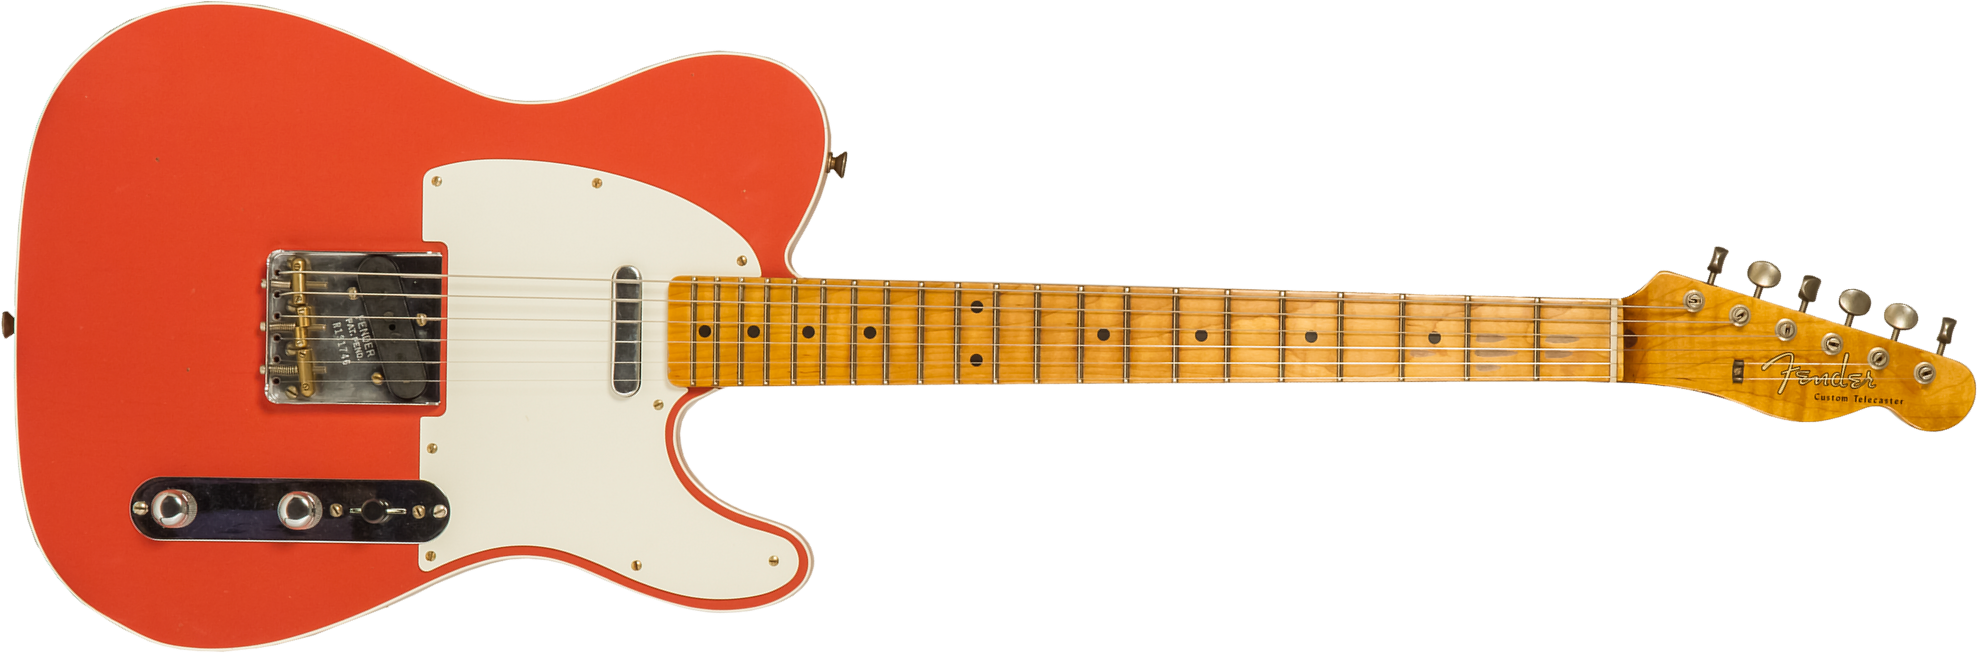 Fender Custom Shop Tele Custom 50s Twisted 2s Ht Mn #r131746 - Journeyman Relic Tahitian Coral - Televorm elektrische gitaar - Main picture